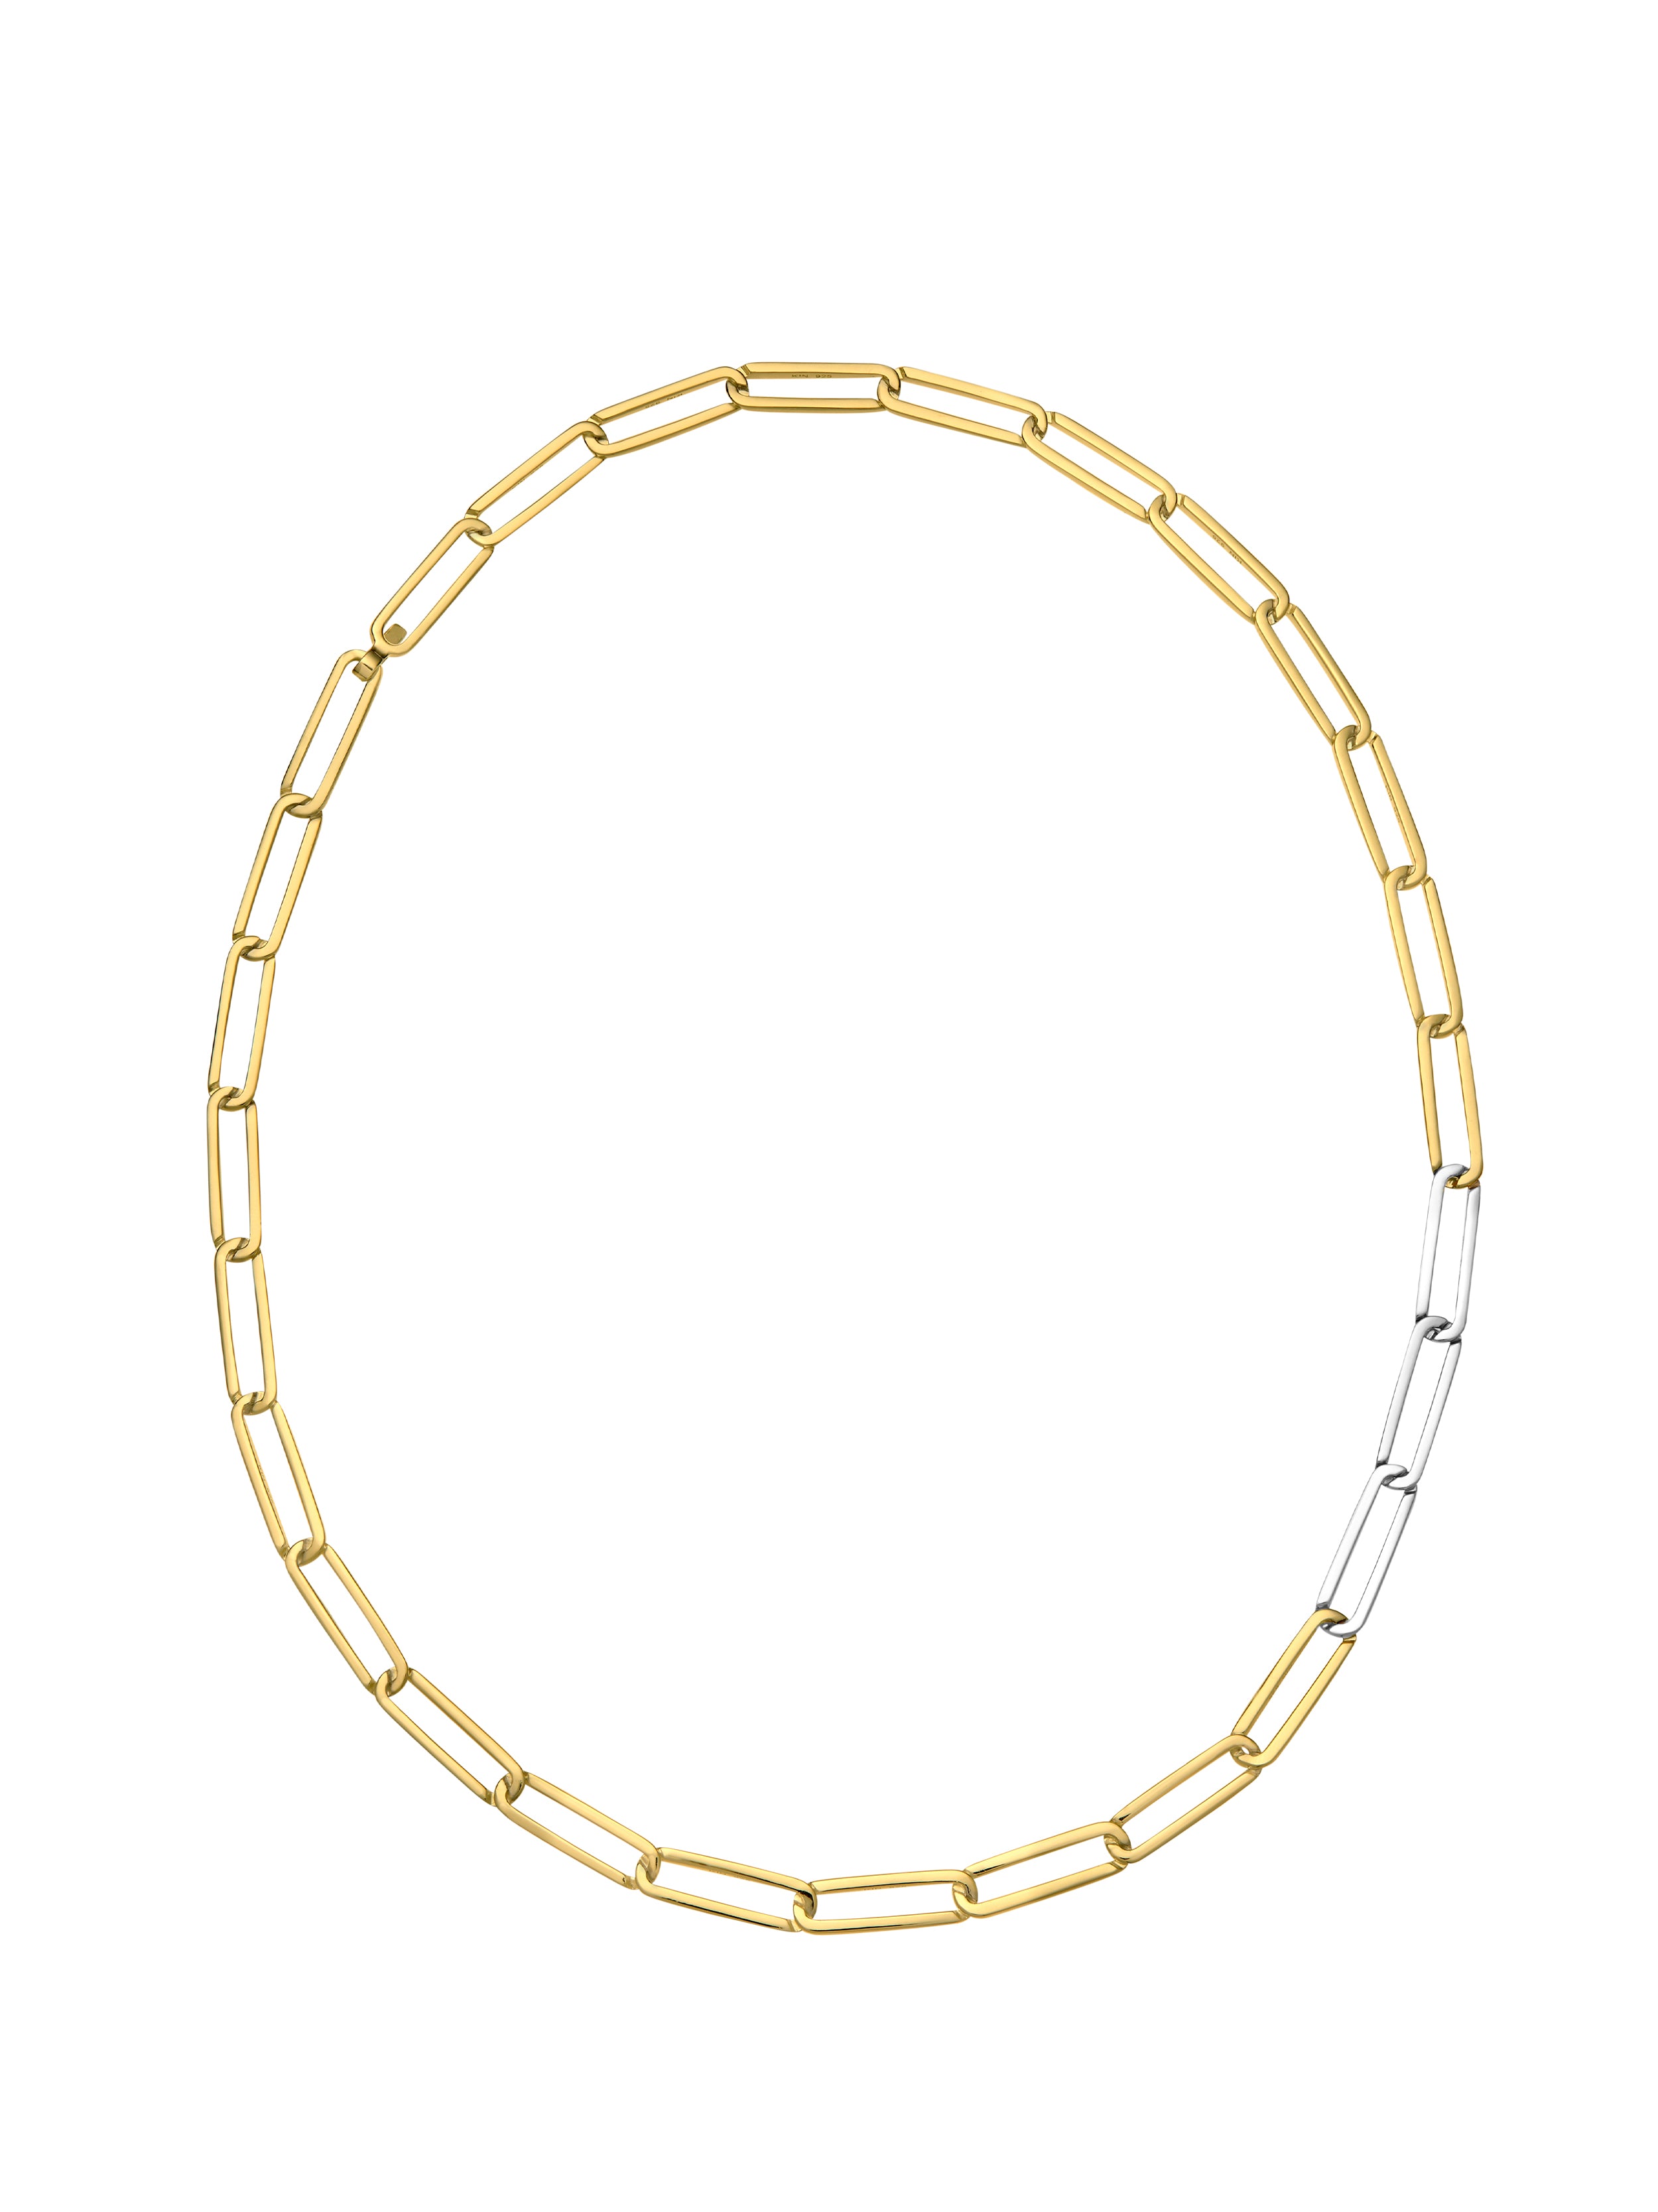 KINRADEN APS EXHALING HER LARGE Necklace - 18k gold, 3 silver links Necklaces